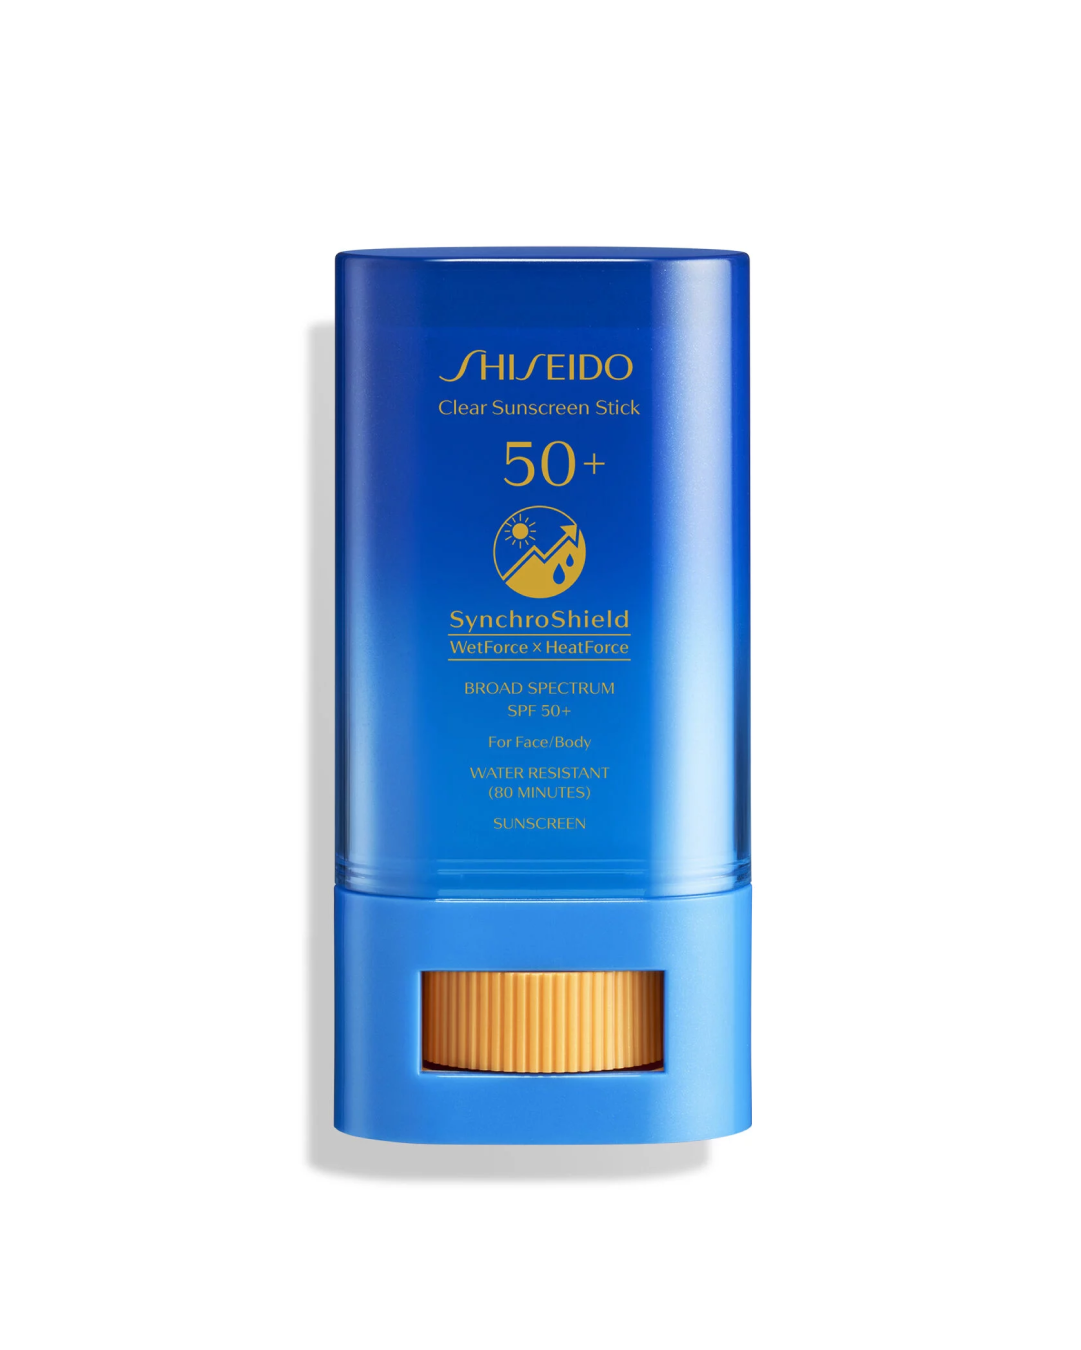 Shiseido Clear Sunscreen Stick SPF 50+ (20g) - Best Buy World Philippines